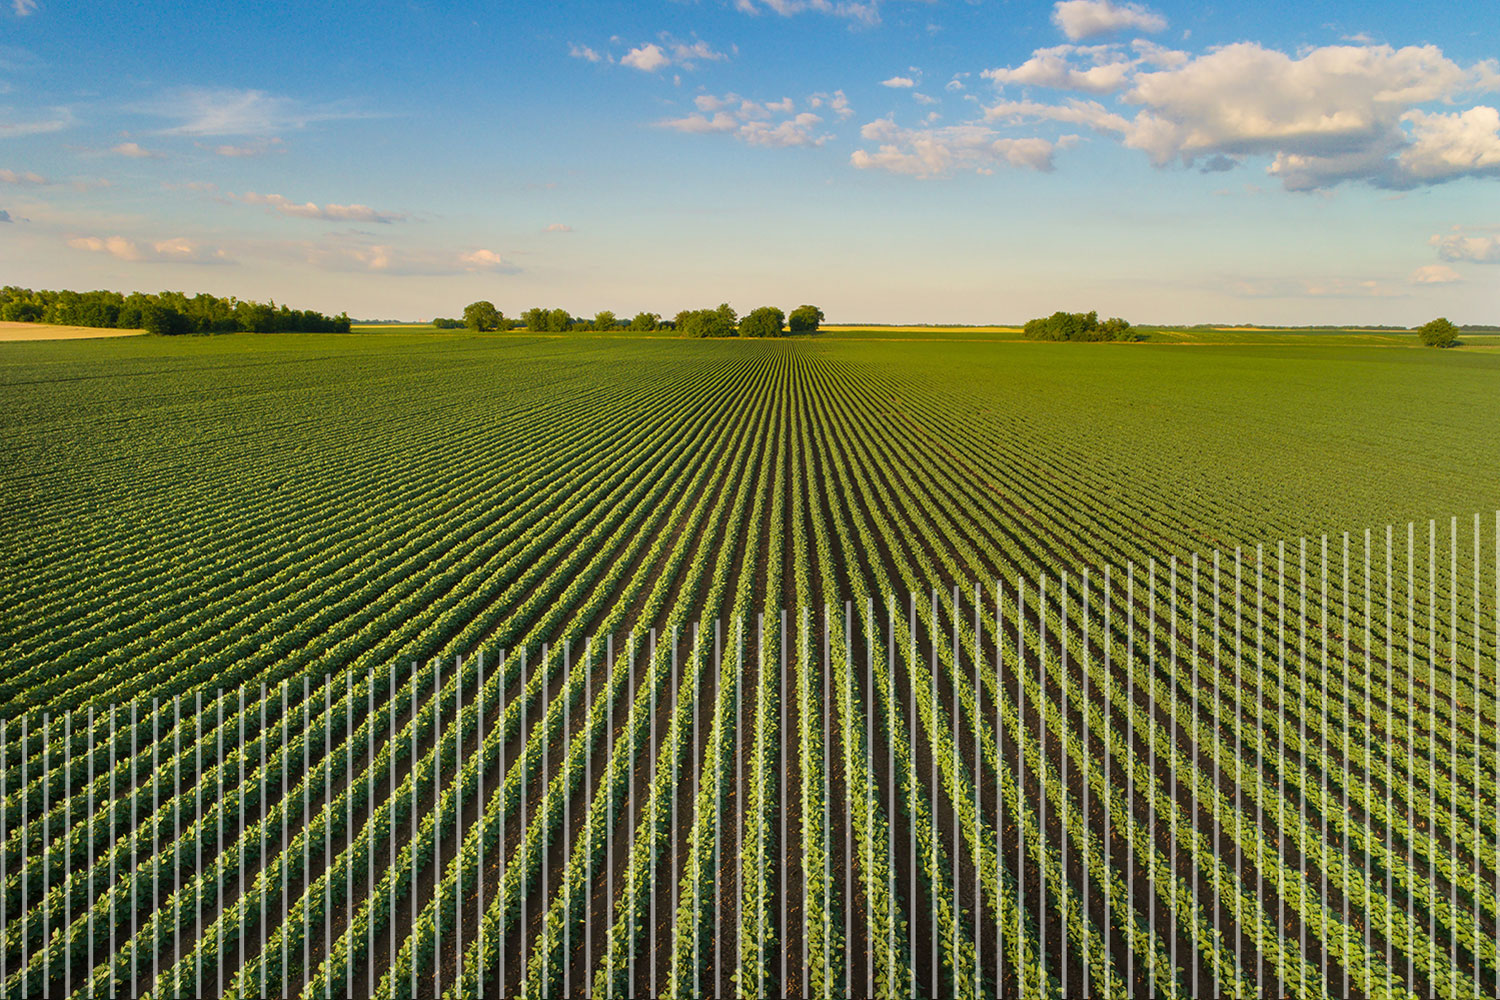 Field of Organic Soybean Crops